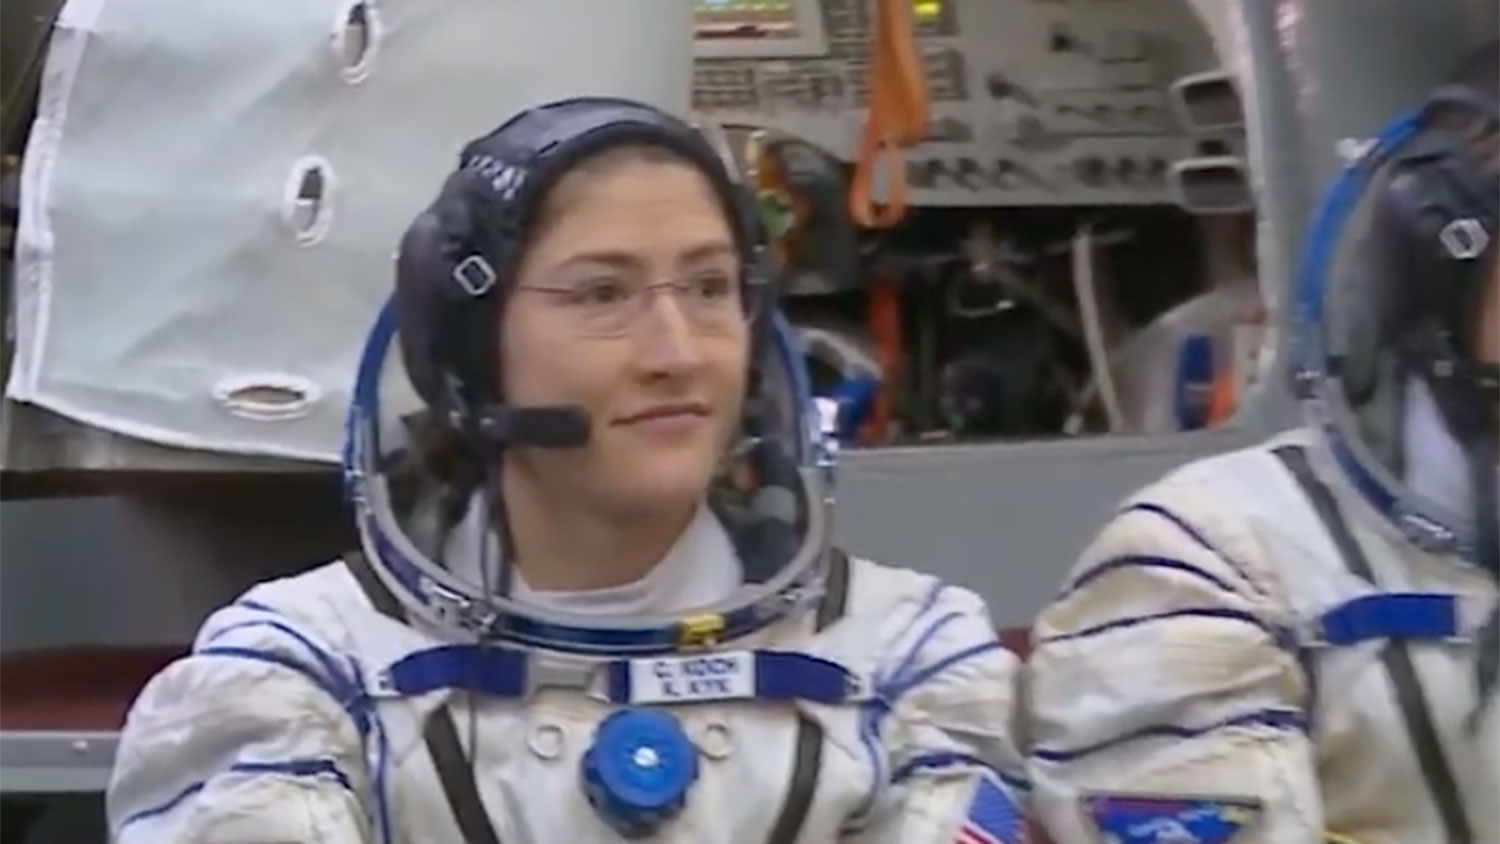 NC State alumna and astronaut Christina Koch 